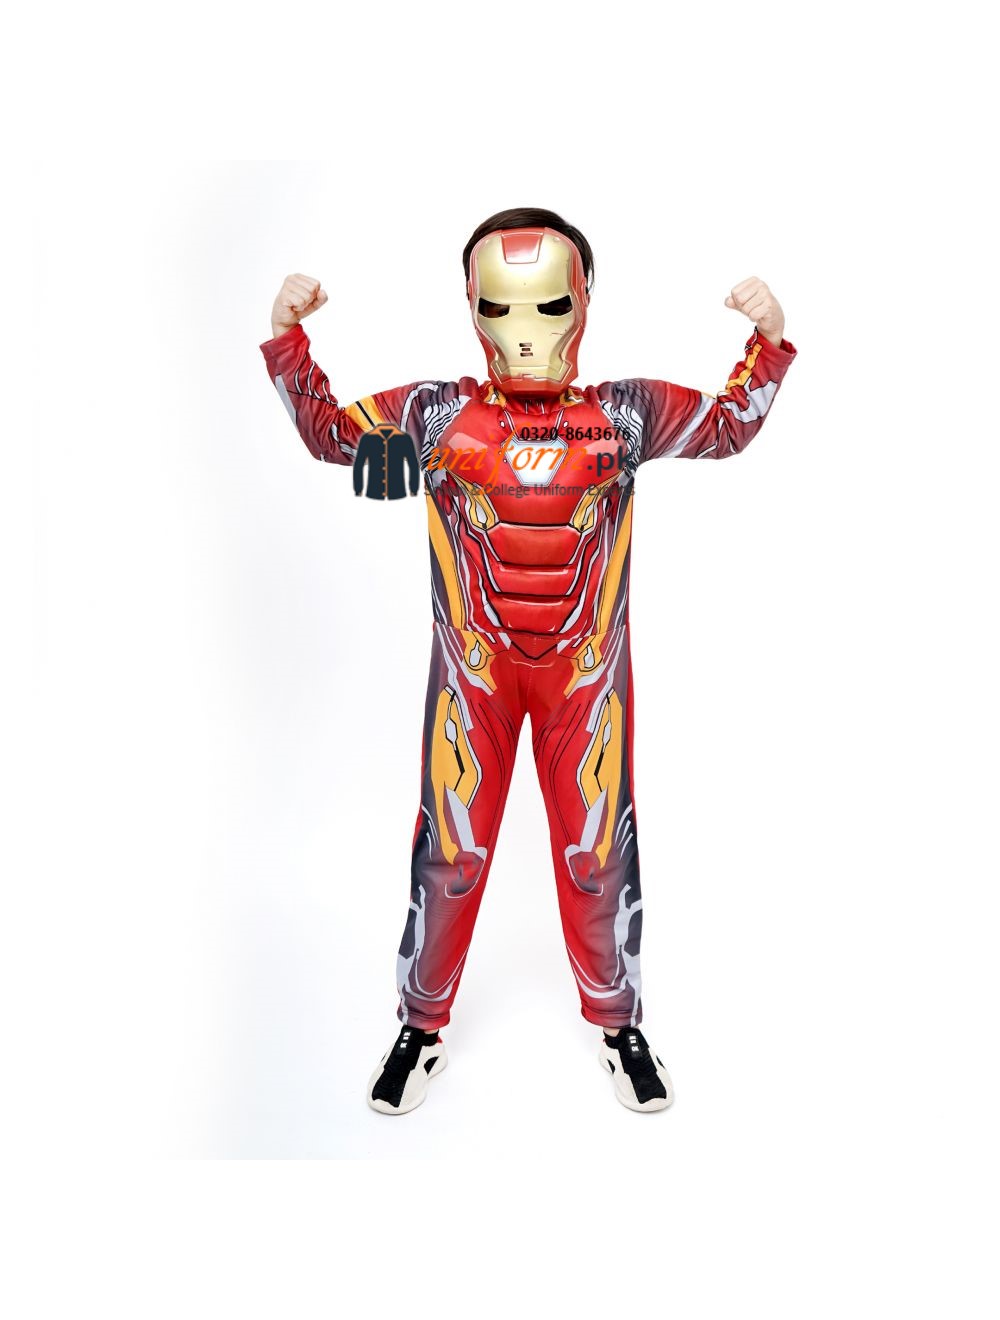 Iron Man Costume